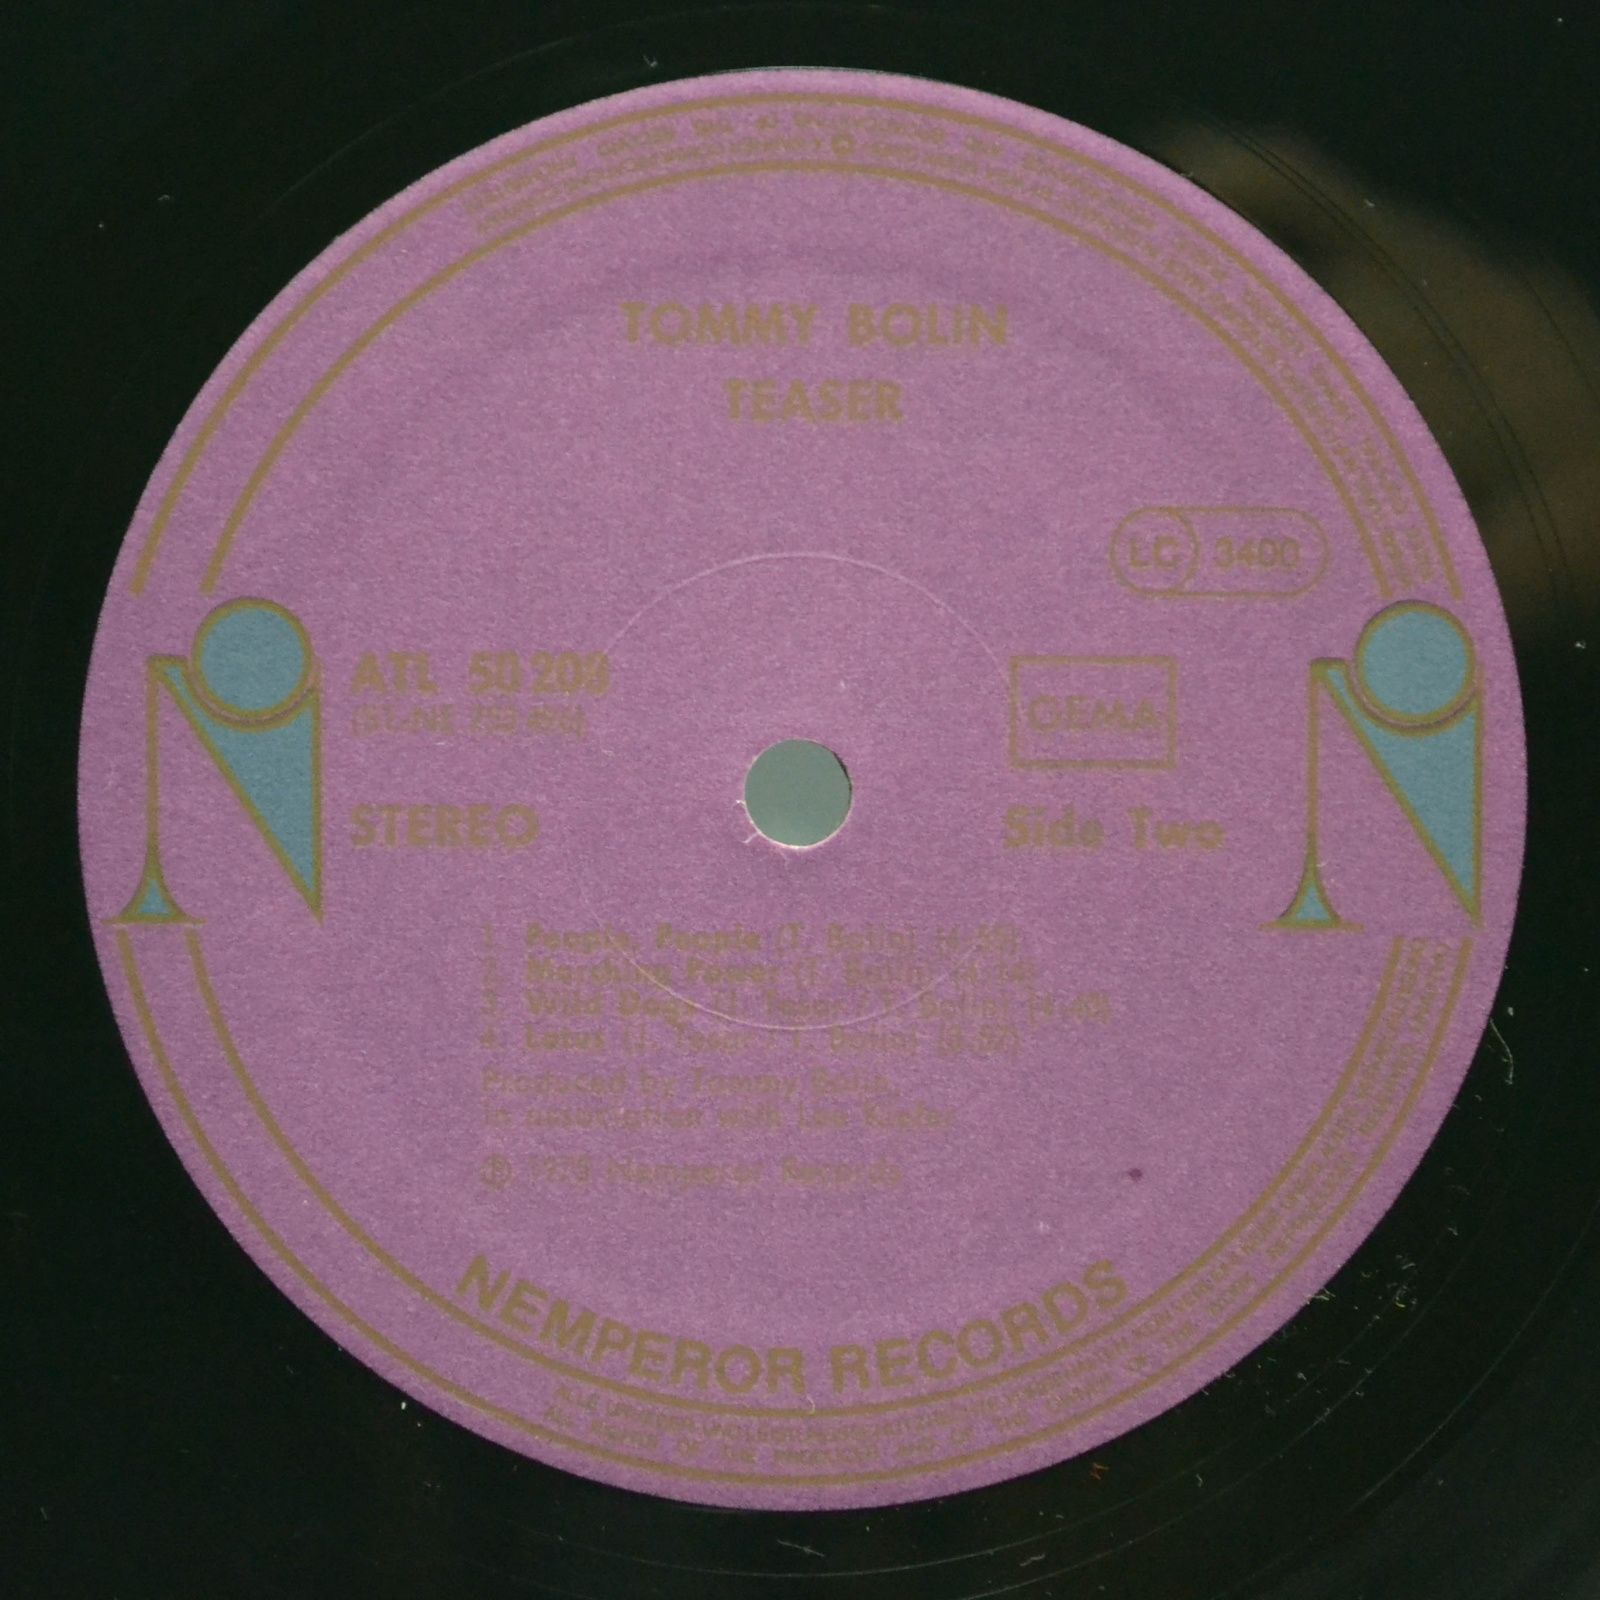 Tommy Bolin — Teaser, 1976